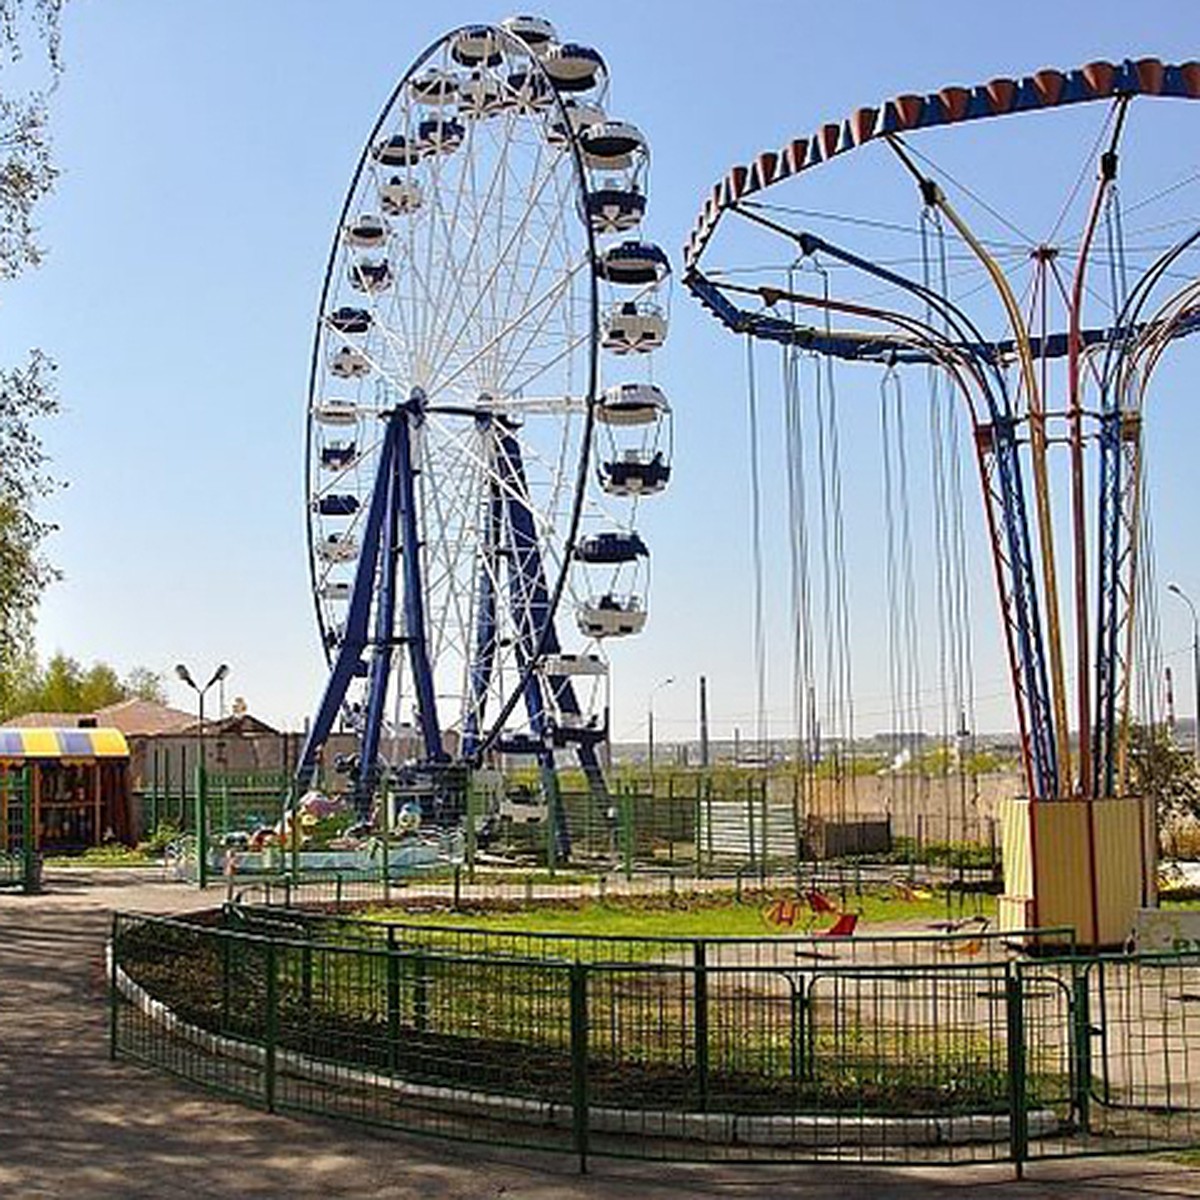 Картинки парка Горького в Ижевске